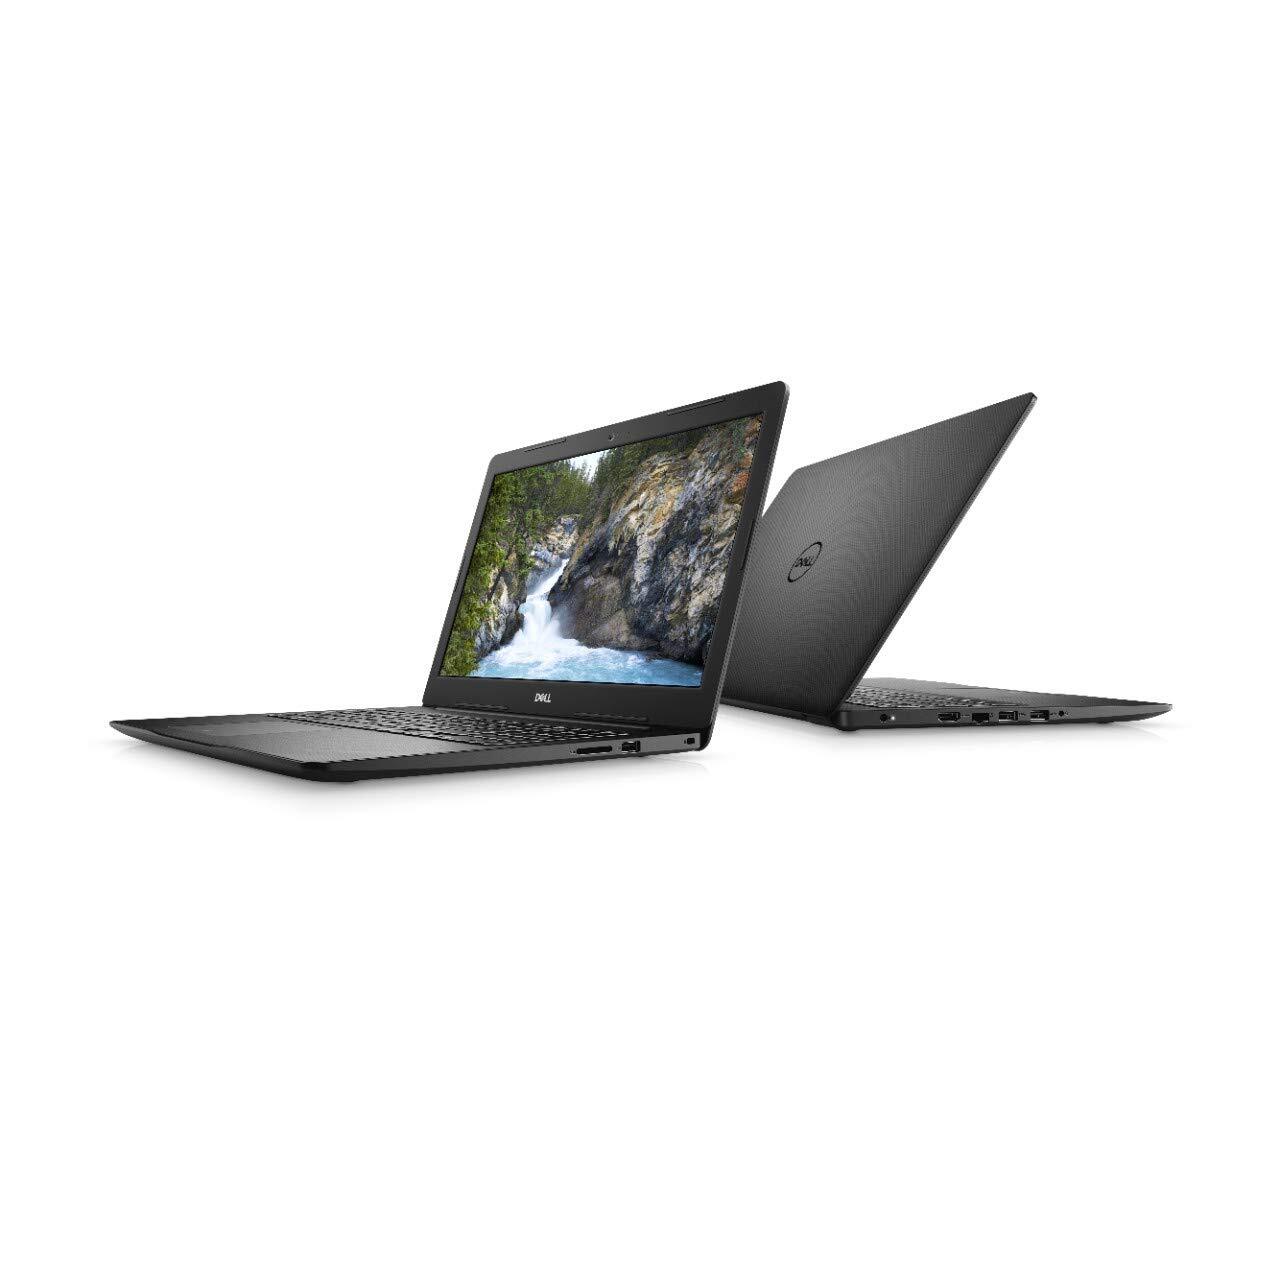 Dell Vostro 3590 15.6-inch FHD Laptop (10th Gen Core i3-10110U/4GB/1TB HDD/Windows 10 + MS Office/Intel HD Graphics), Black-M000000000521 www.mysocially.com